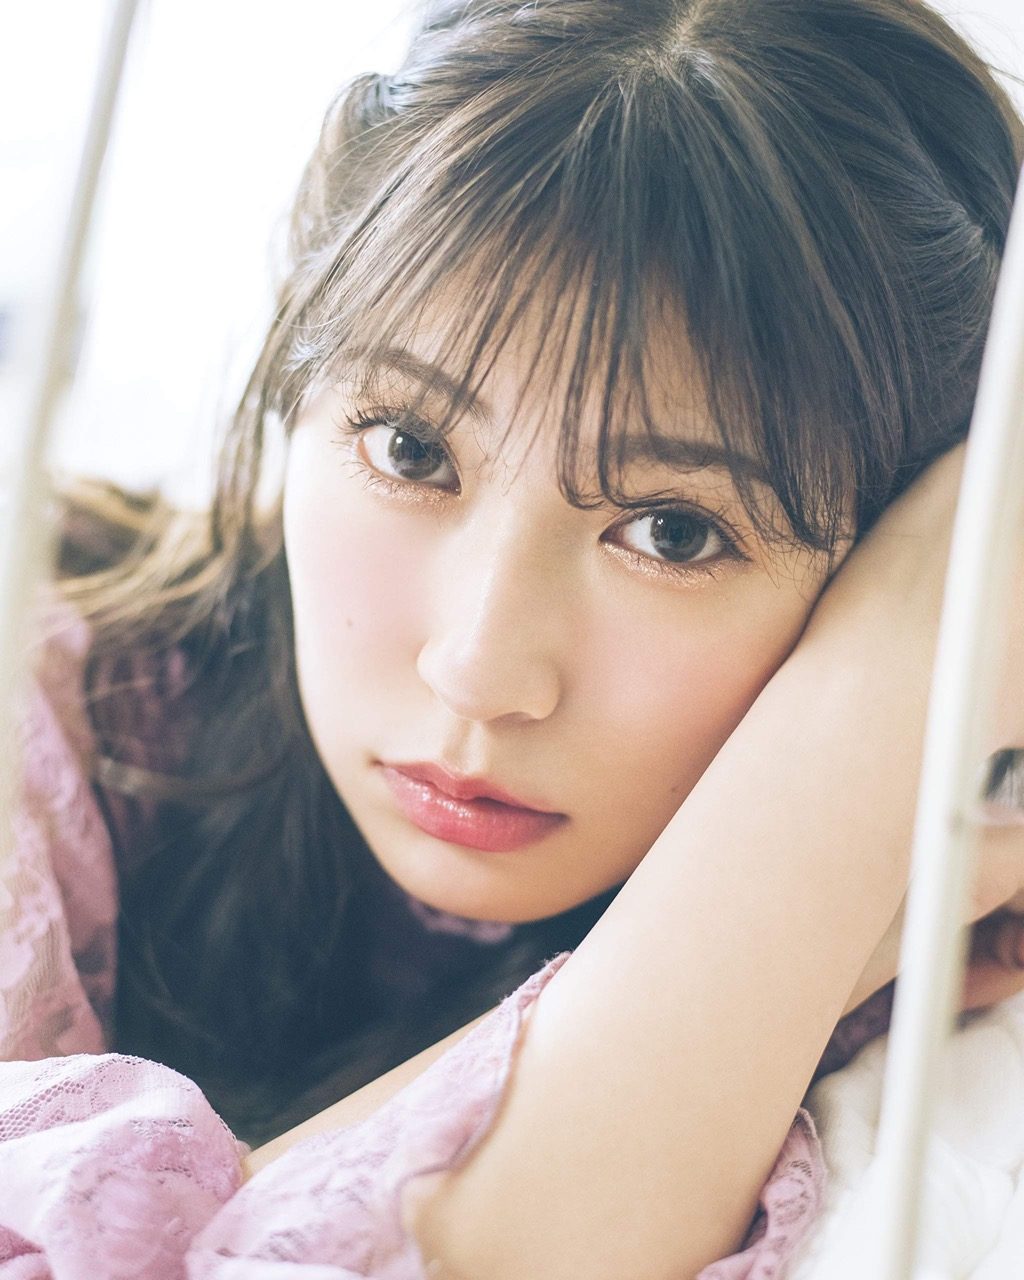 NMB48 吉田朱里 公式生写真 アカリン あかりん YouTuber 女子力 - アイドル